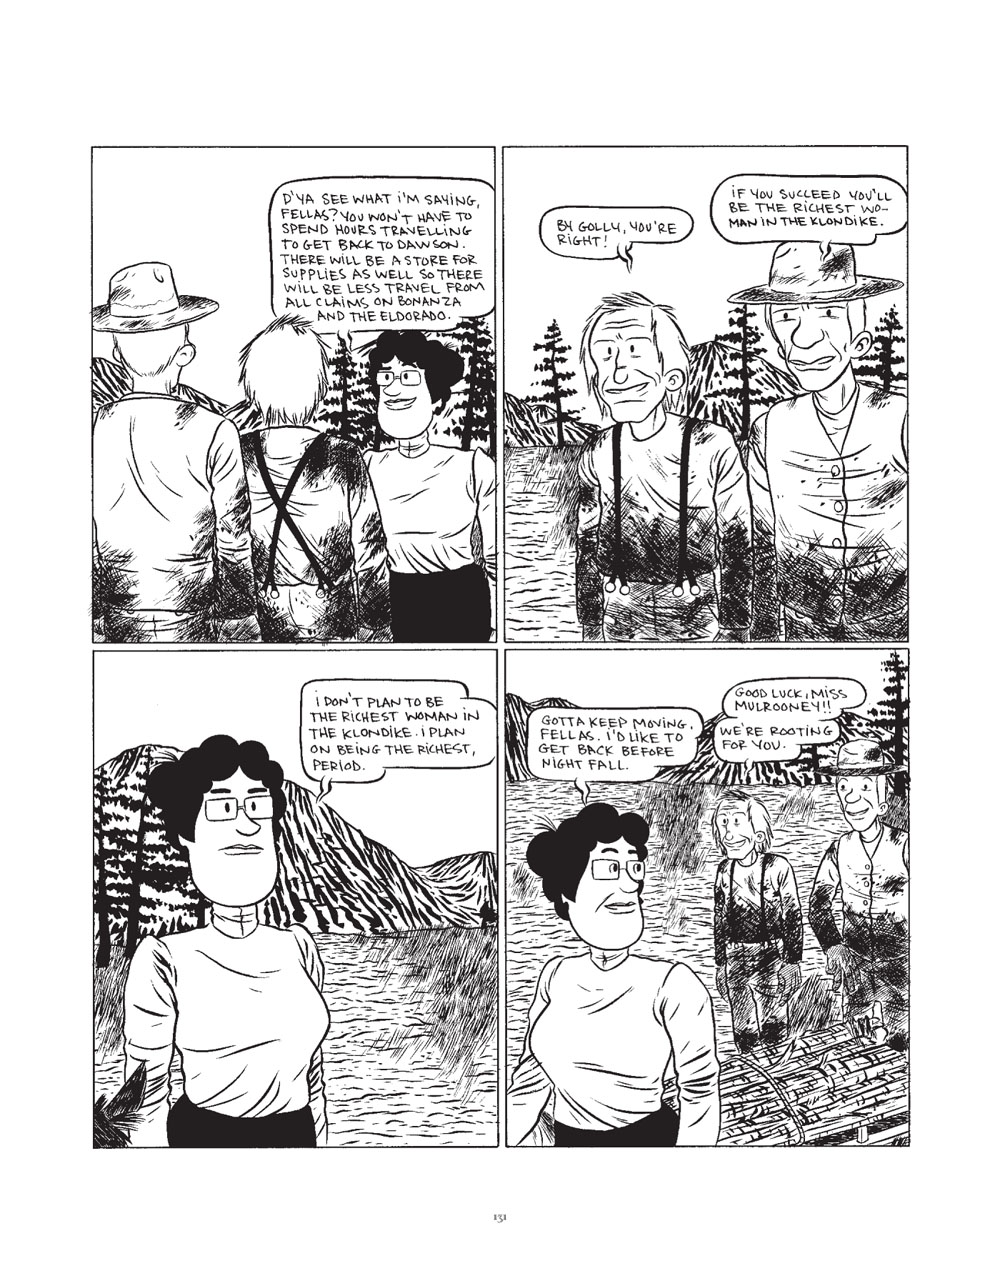 The Klondike Page 131